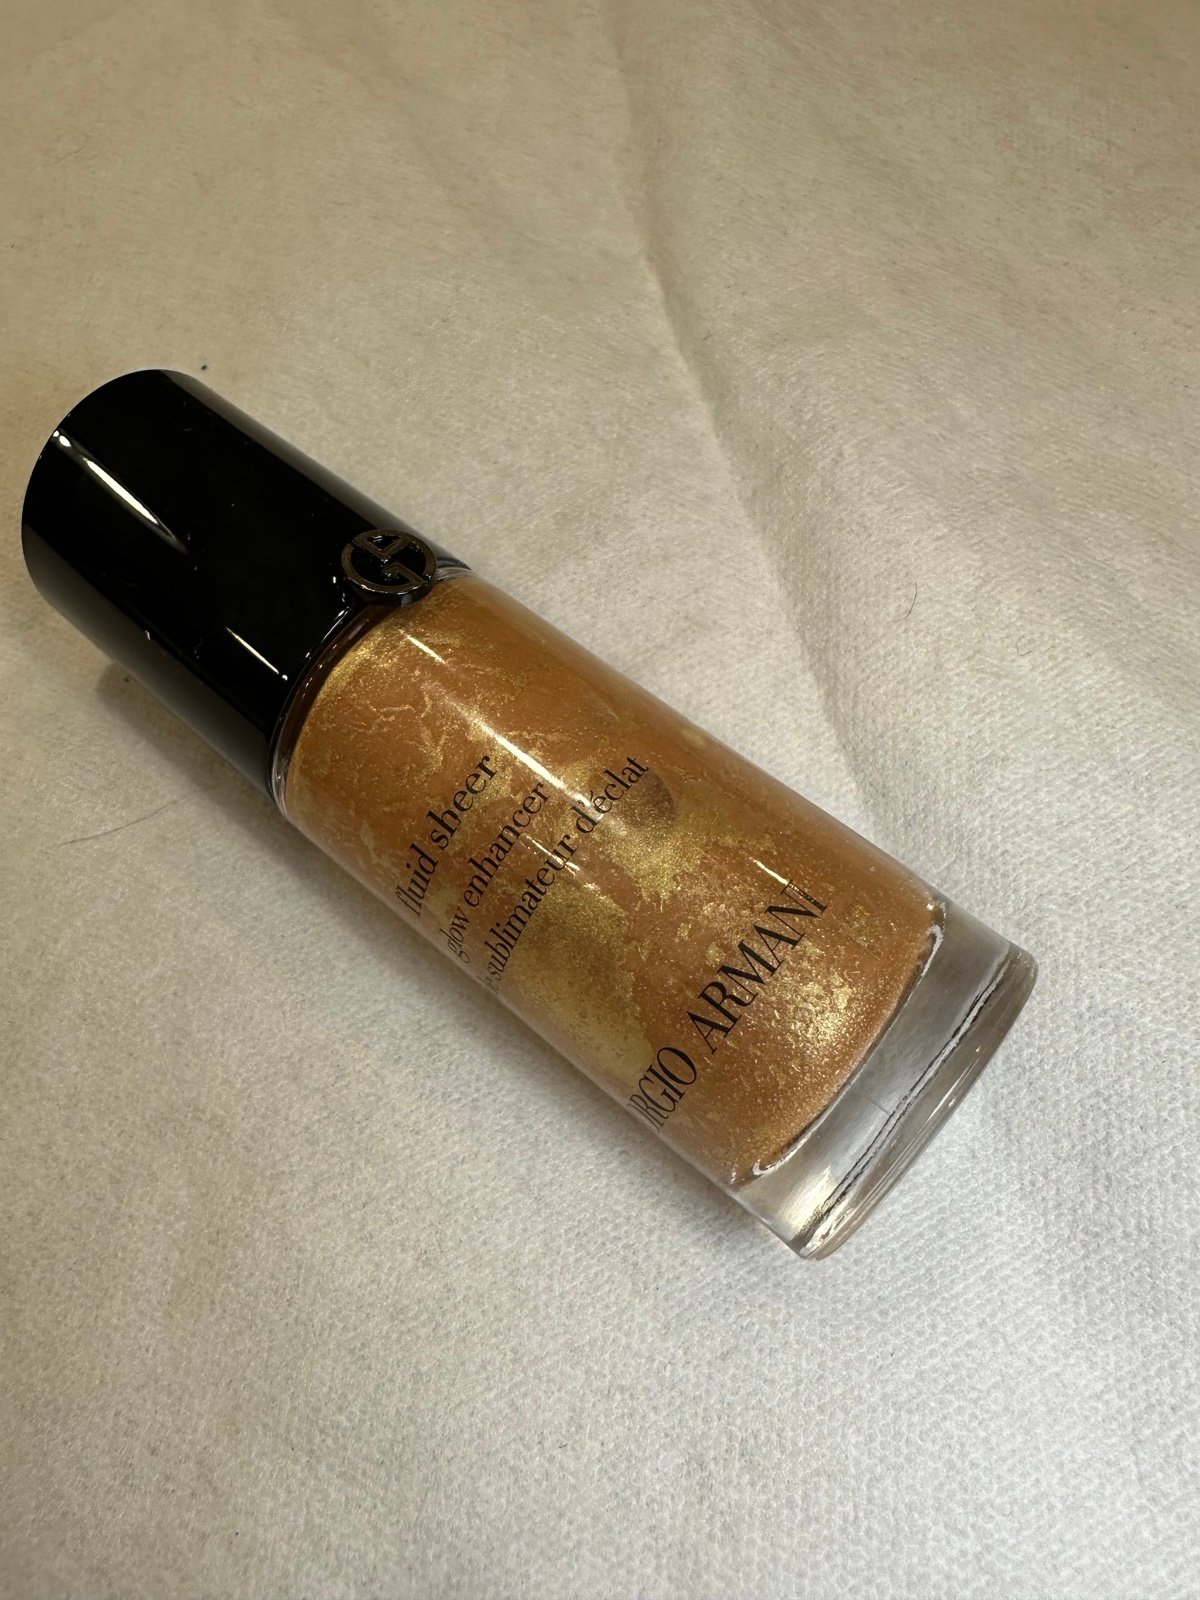 Armani Beauty Fluid Sheer Glow Enhancer Highlighter Color 10 - bronze dm5E2GC0h